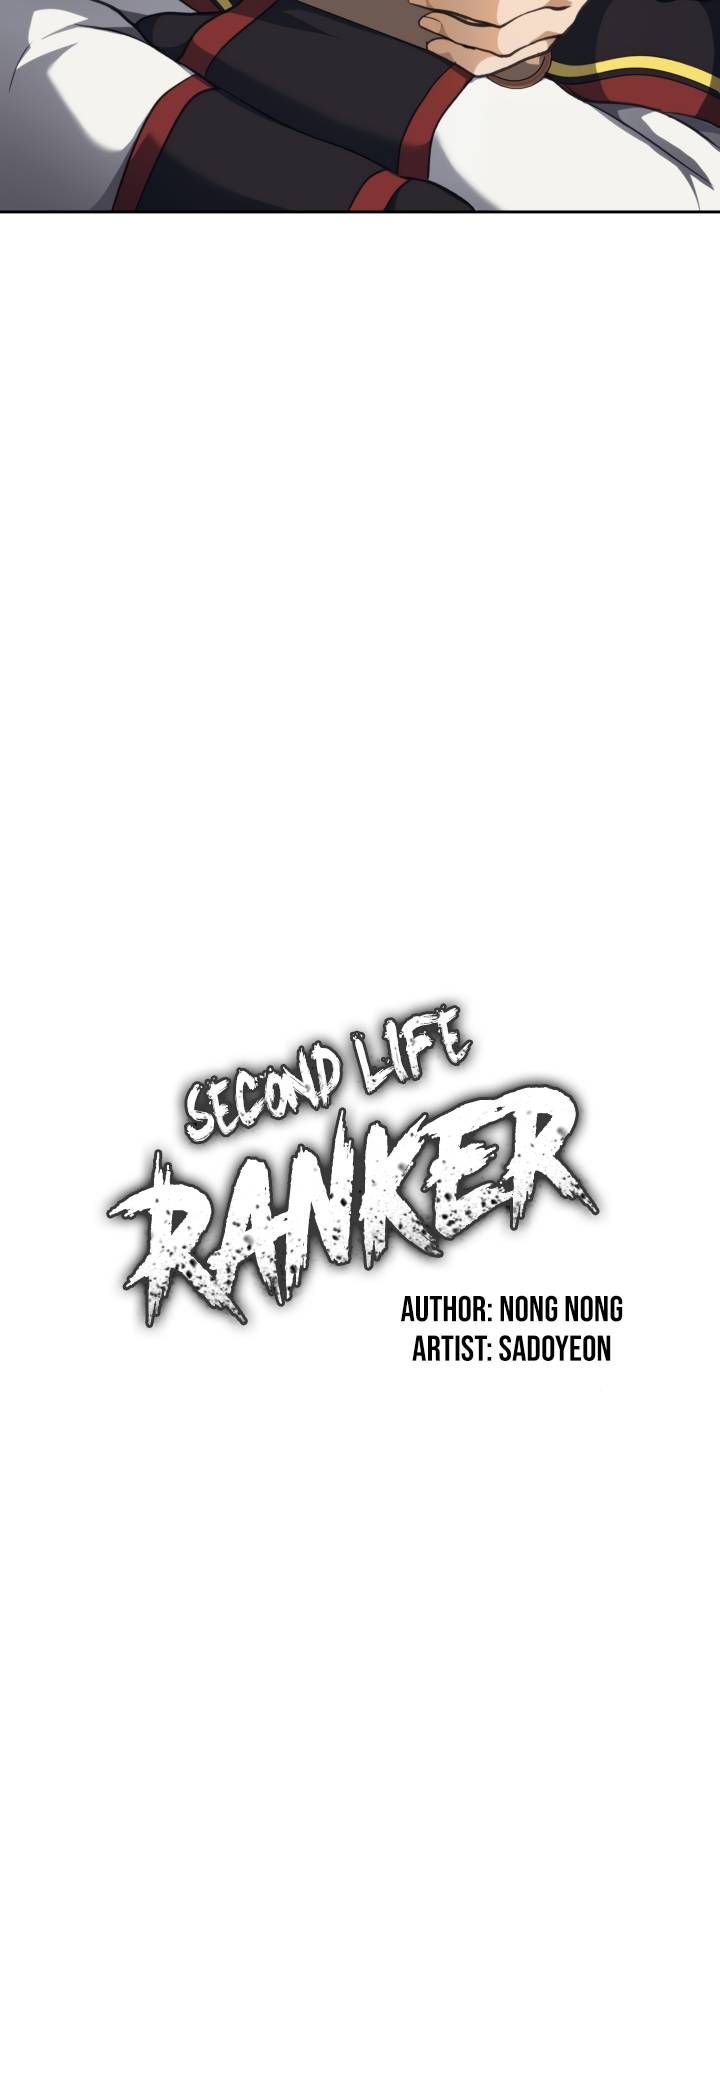 Second Life Ranker 77 10